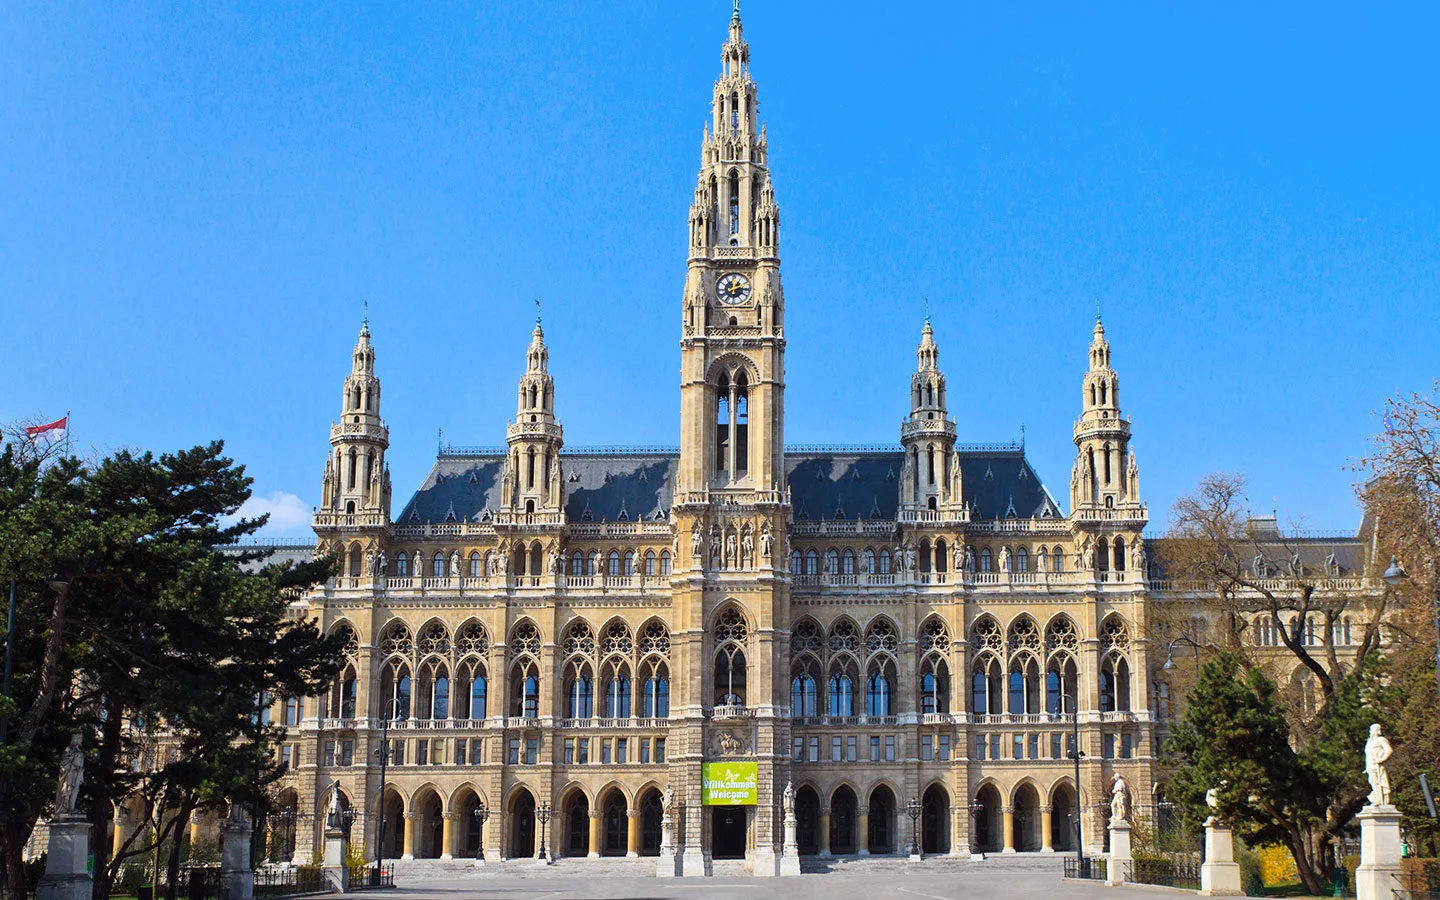 Vienna's Rathaus or City Hall